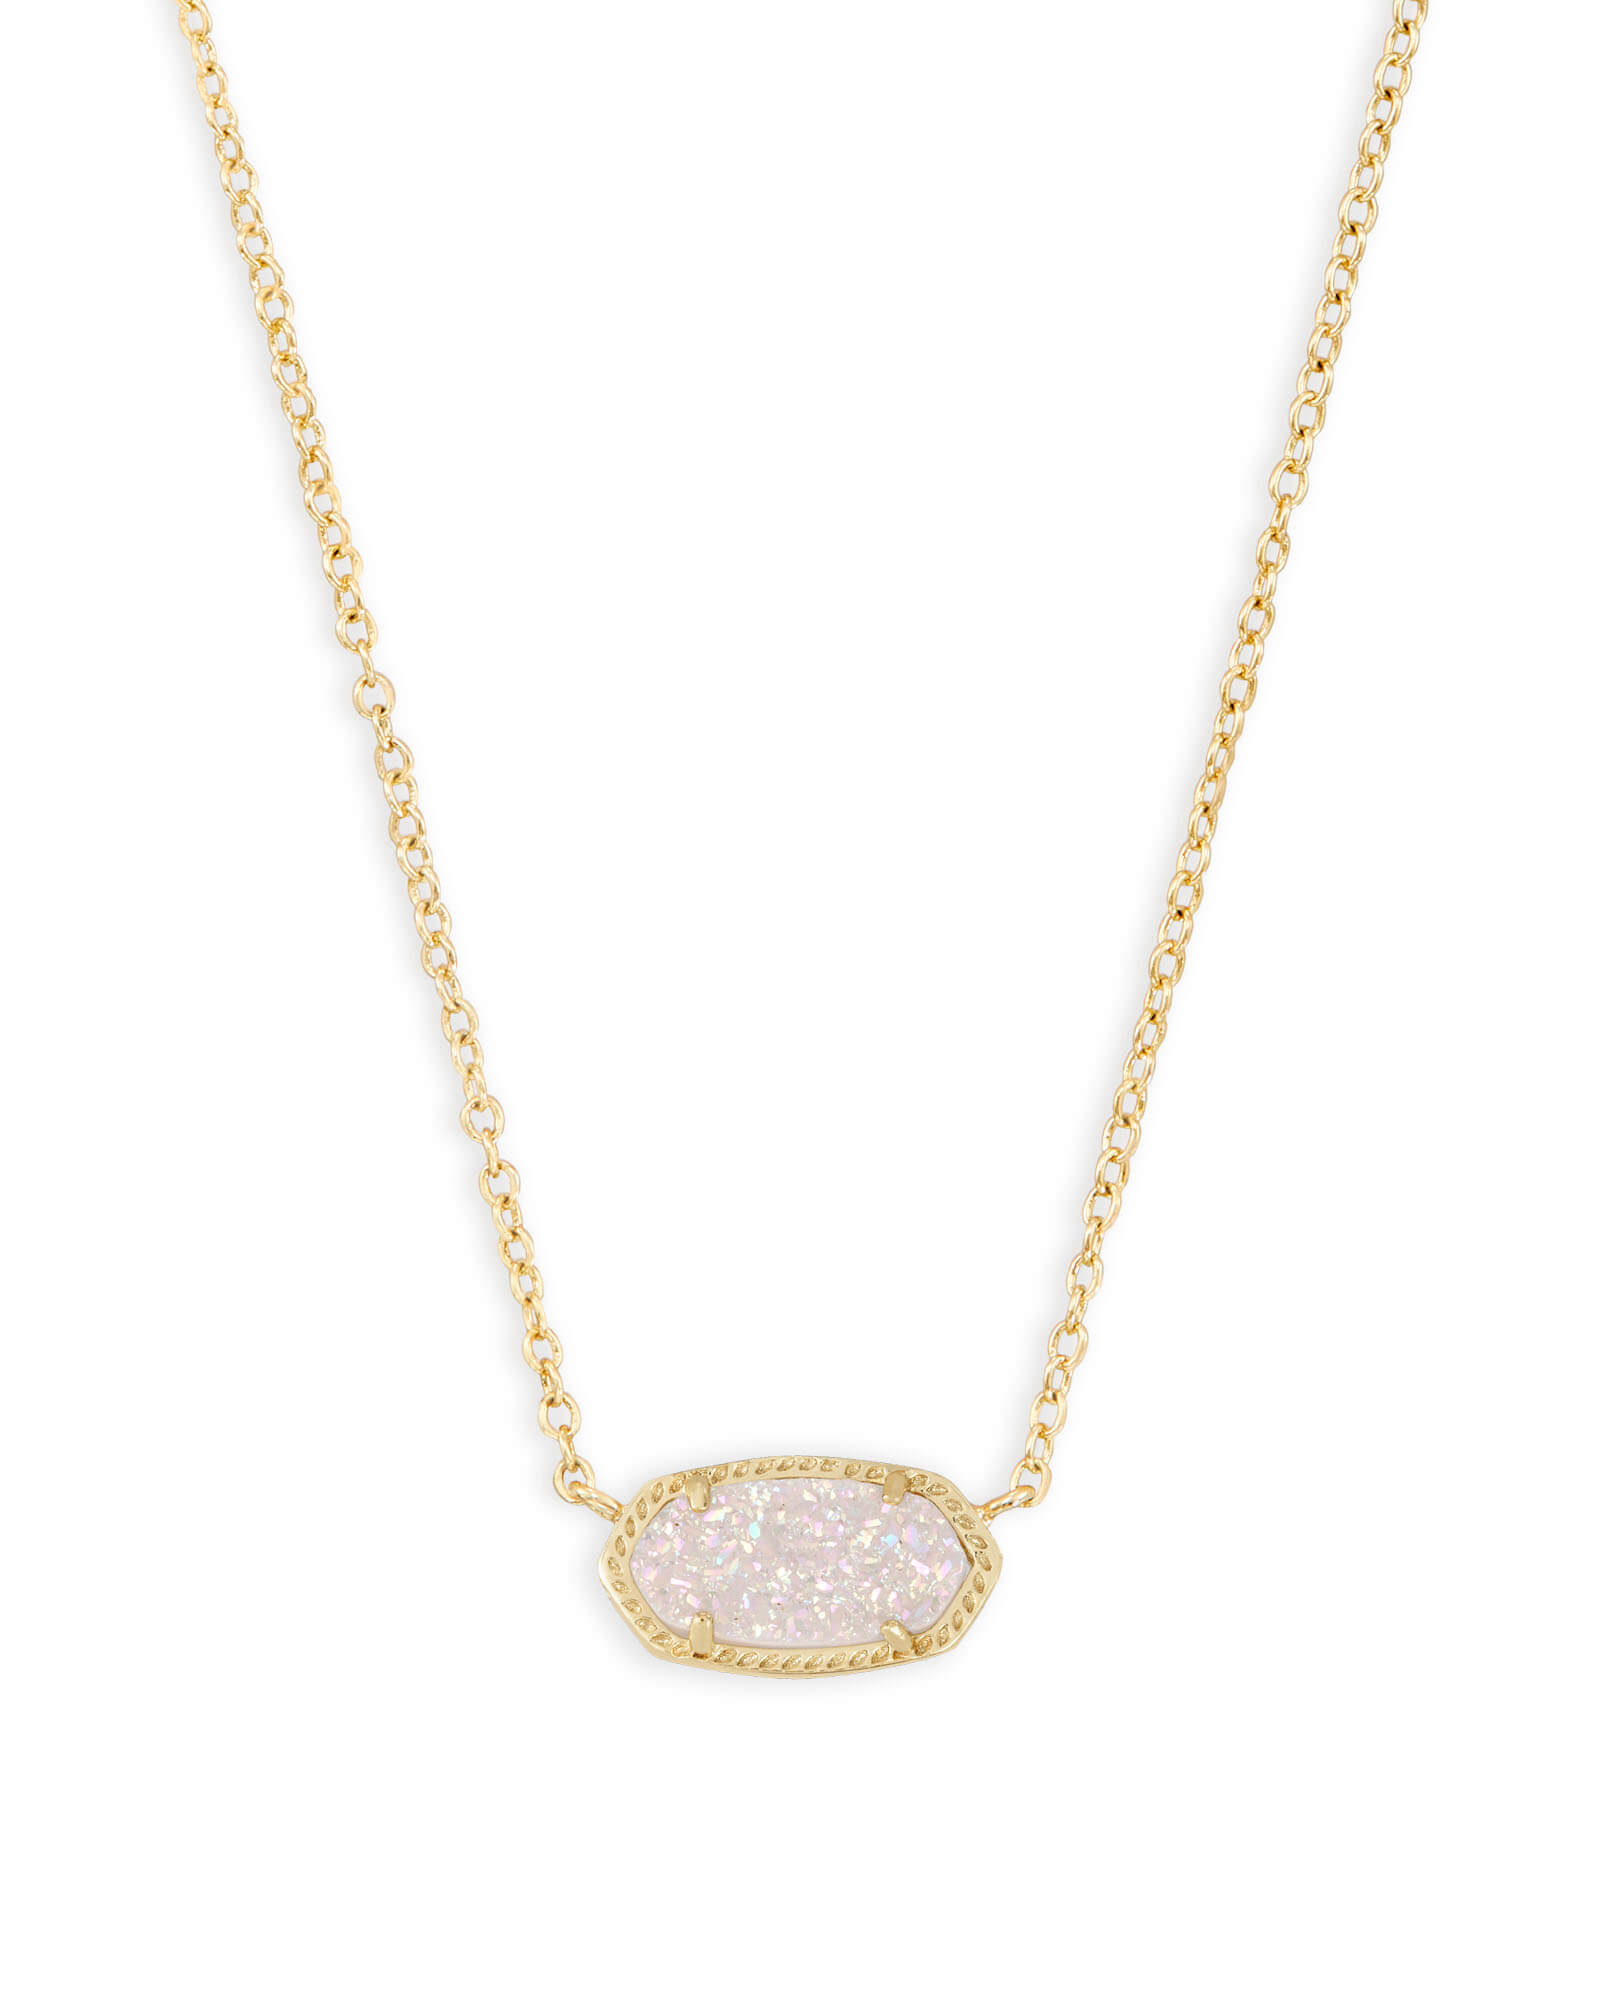 Elisa Gold Pendant Necklace in Drusy | Kendra Scott